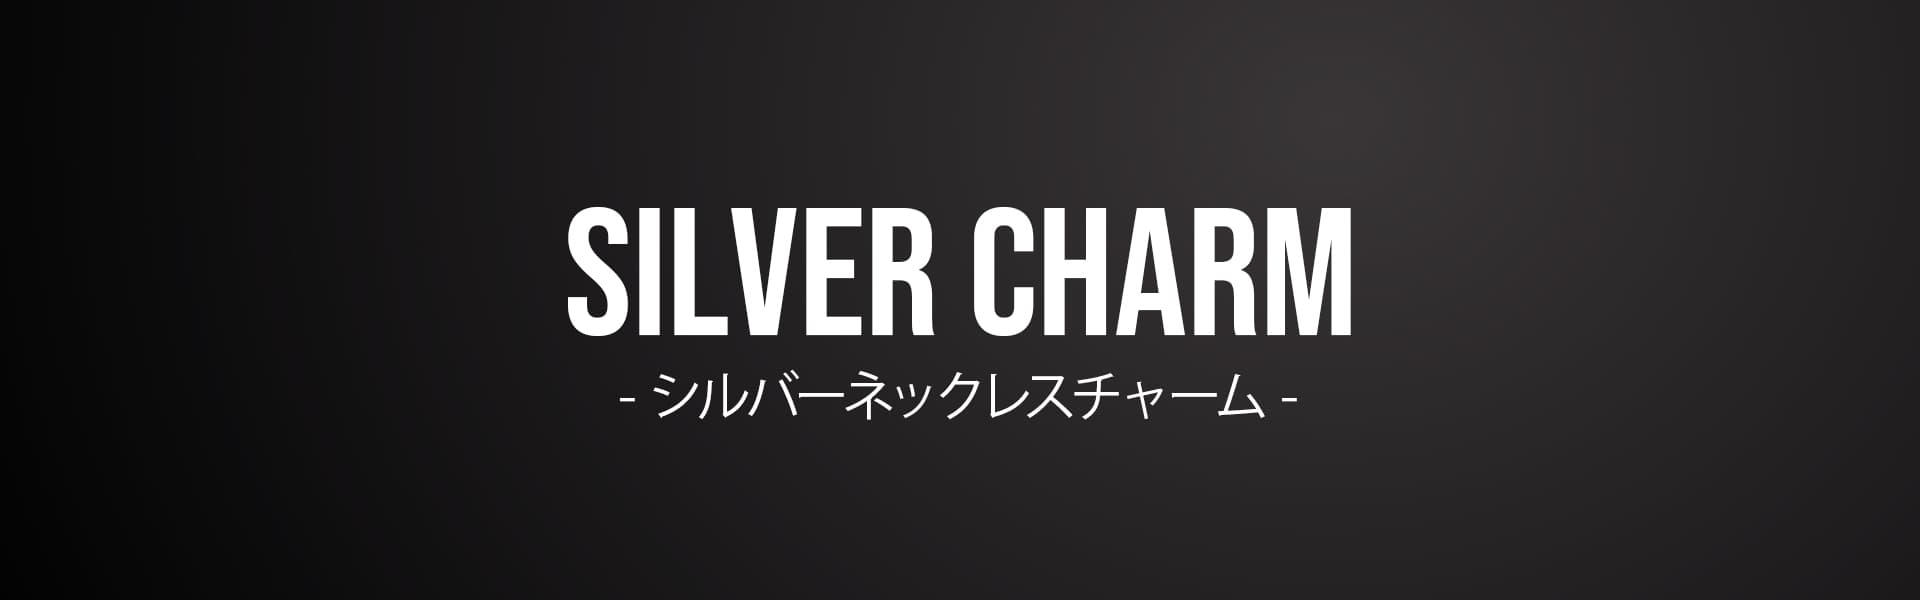 silver charm